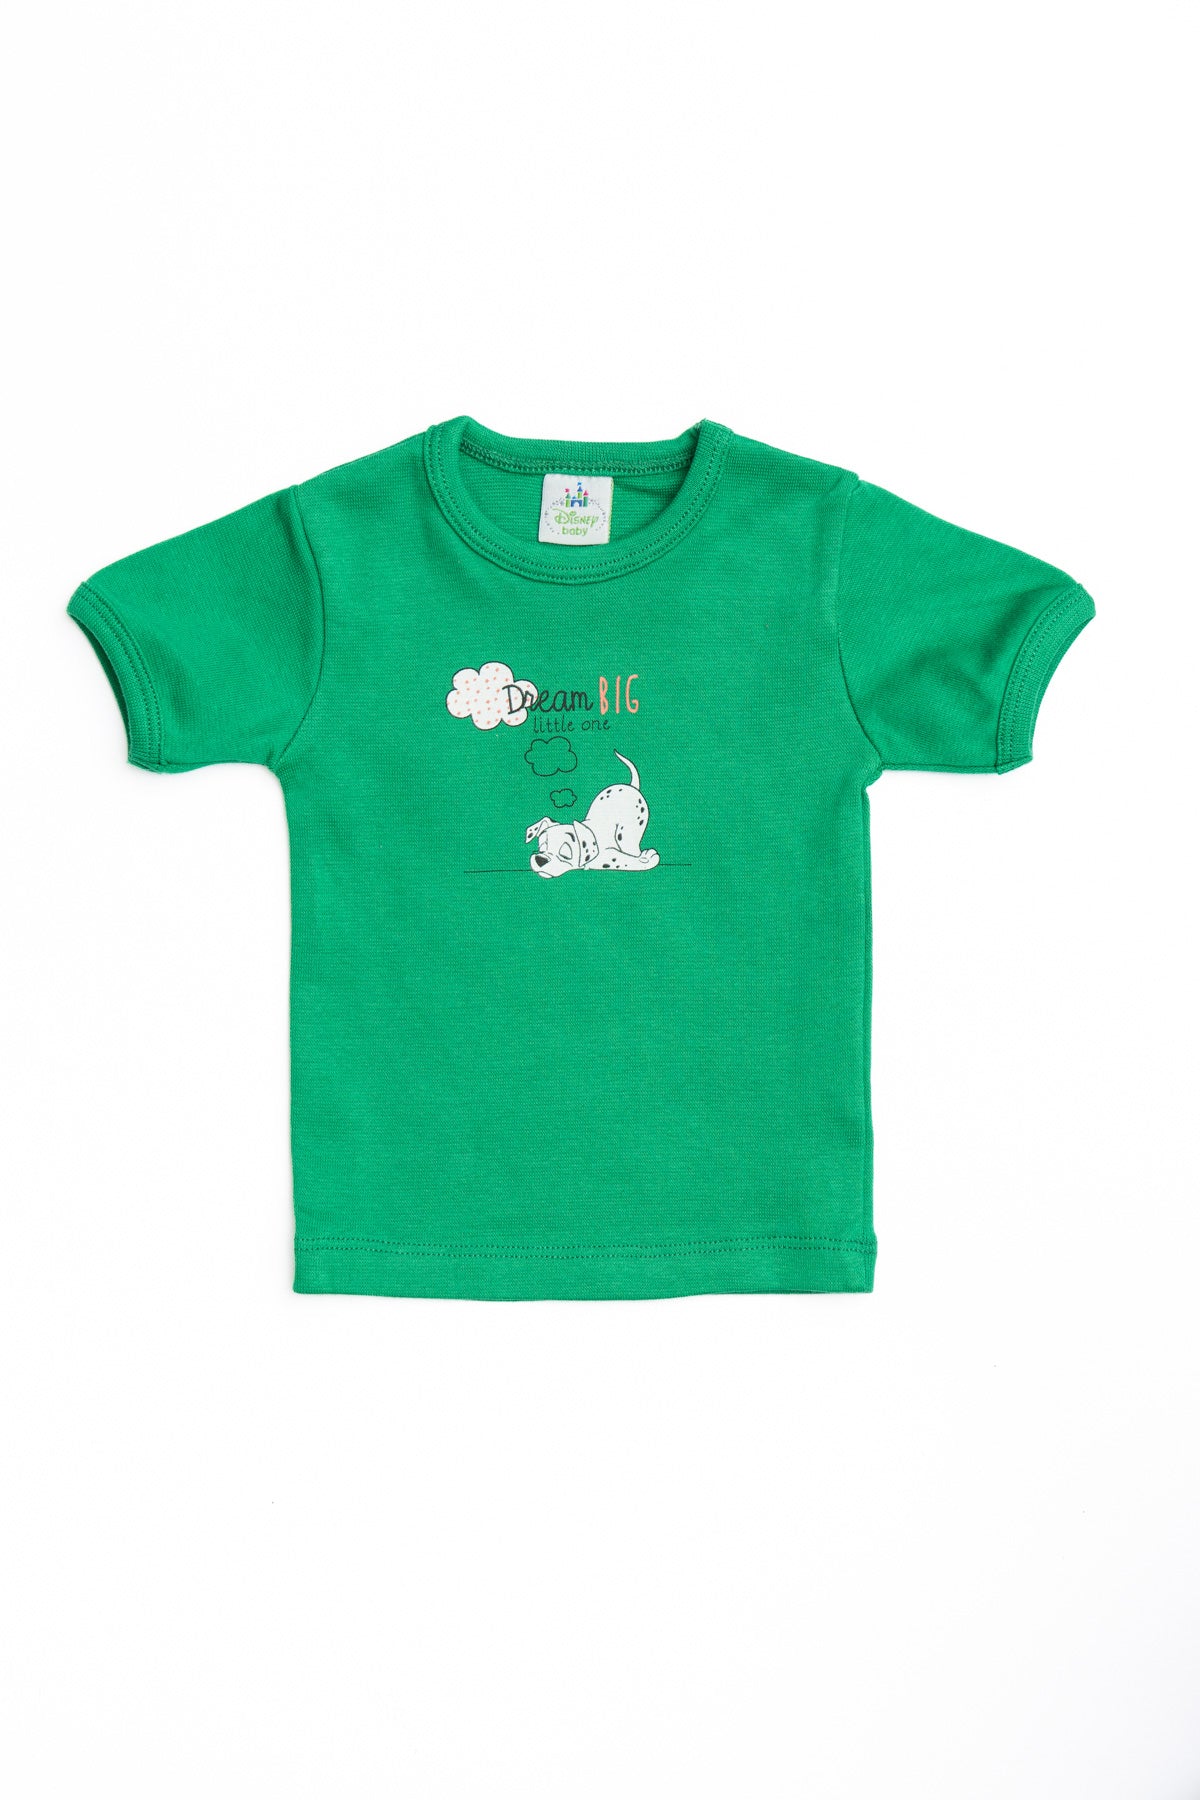 T-Shirt Baby Dalmation  "Dream" Half sleeve 4010